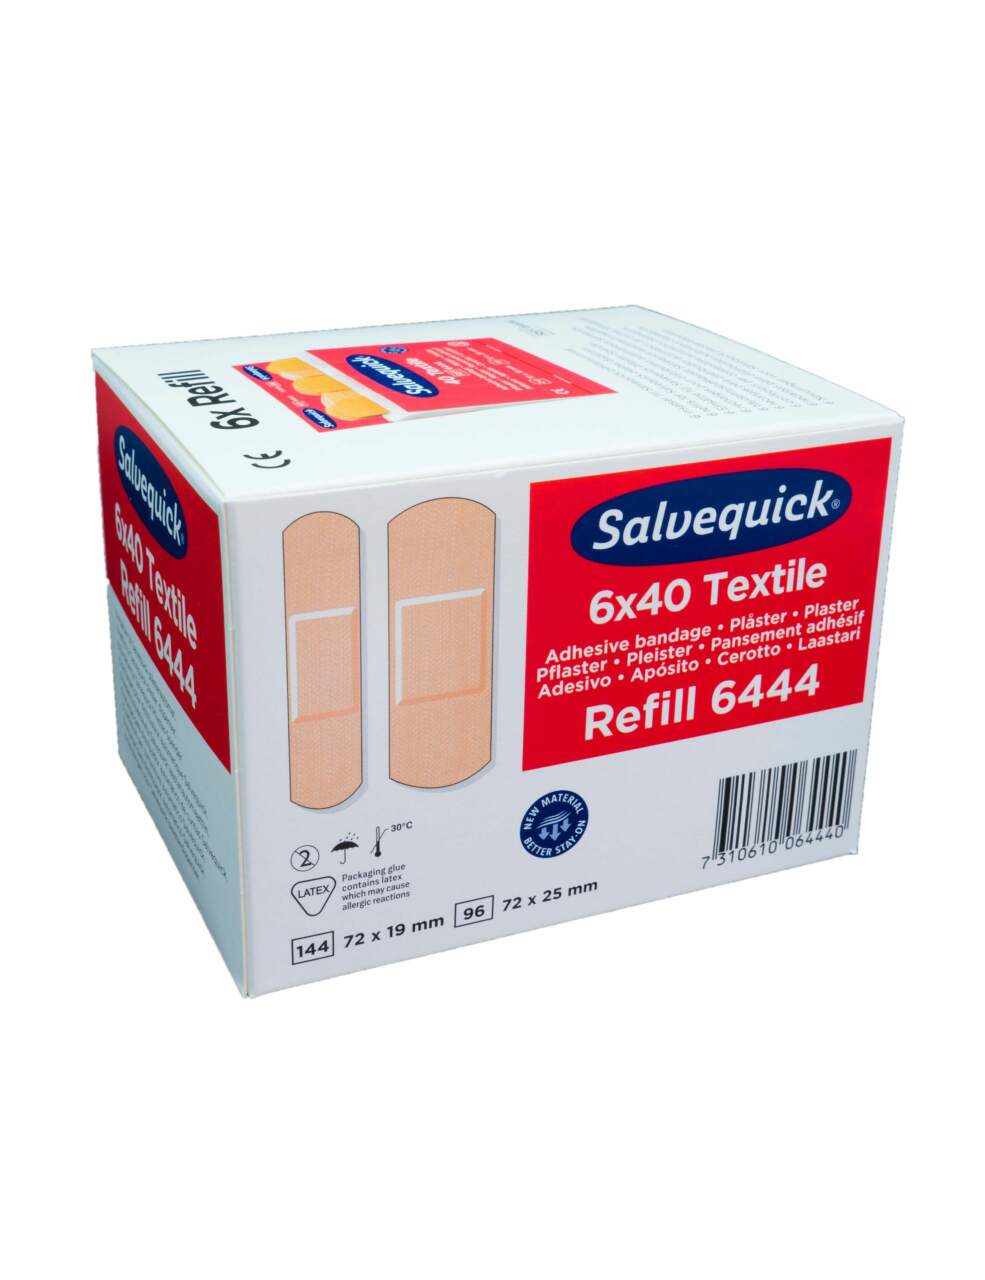 Salvequick Sofortpflaster Box 6×40 Textile REF 6444